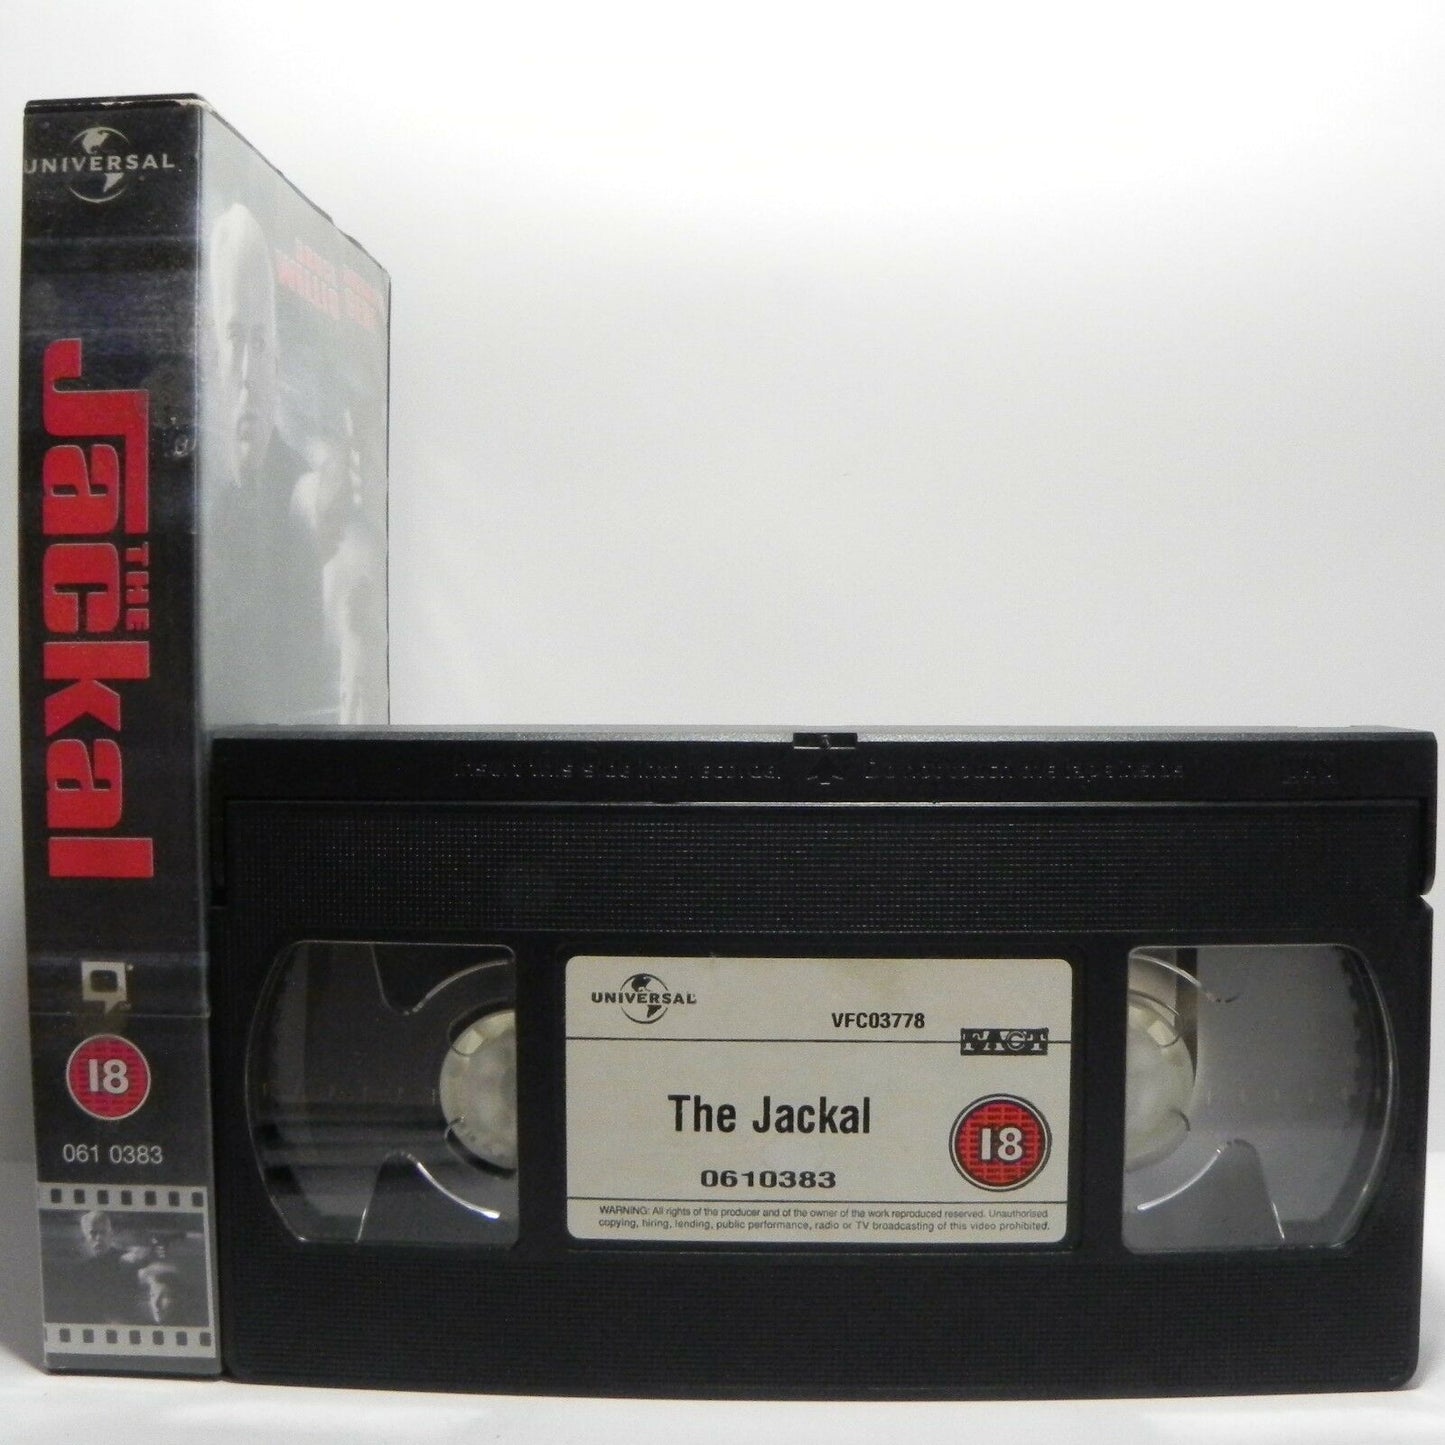 The Jackal: Bruce Willis/Richard Gere - (1997) Universal - Action/Thriller VHS-